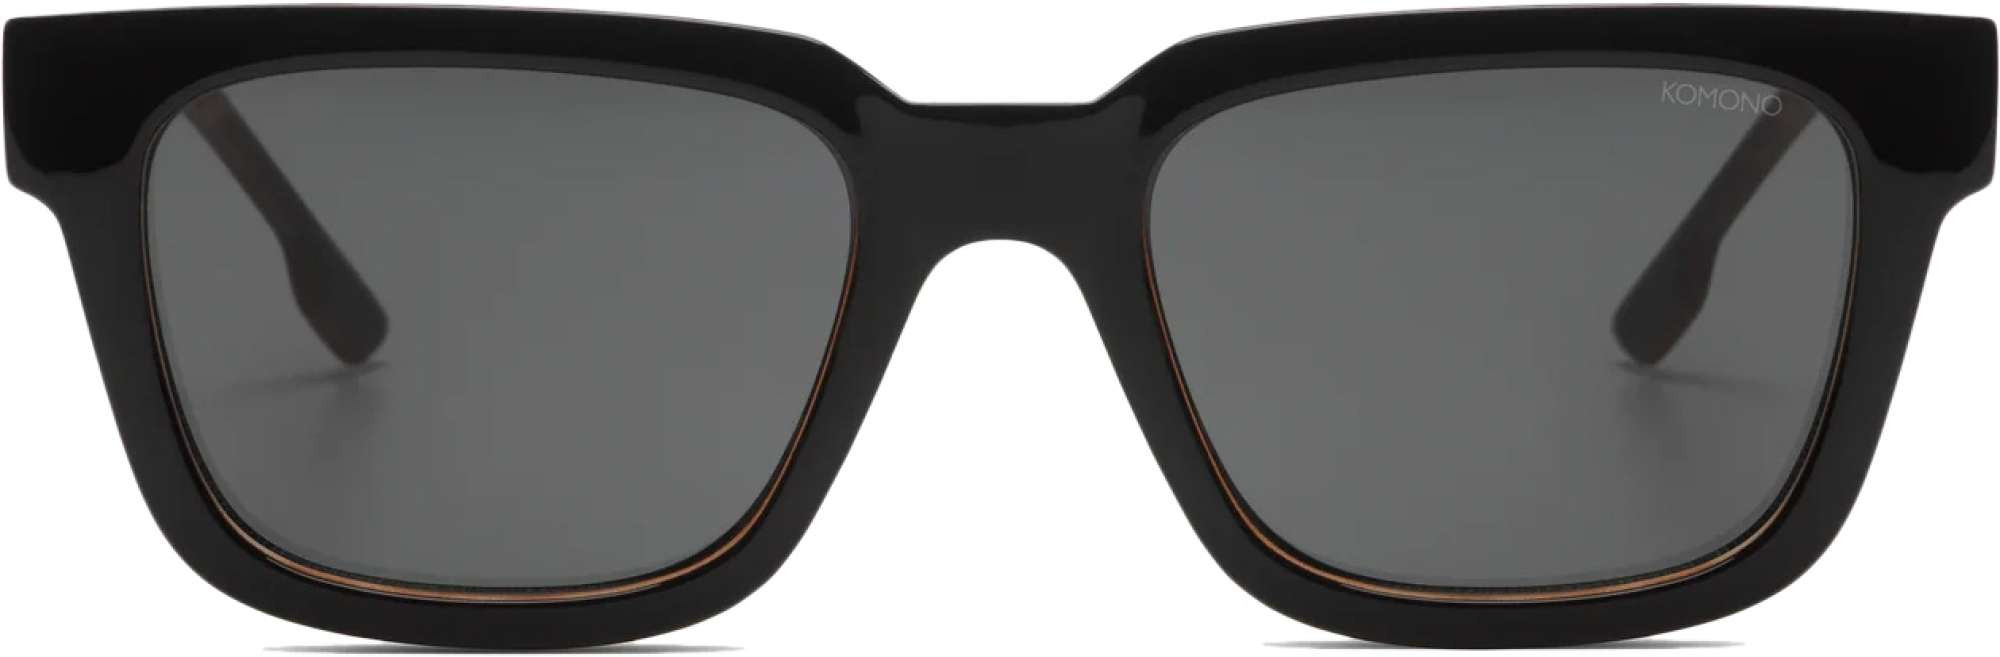 Afbeelding van Komono Bobby black tortoise sunglasses